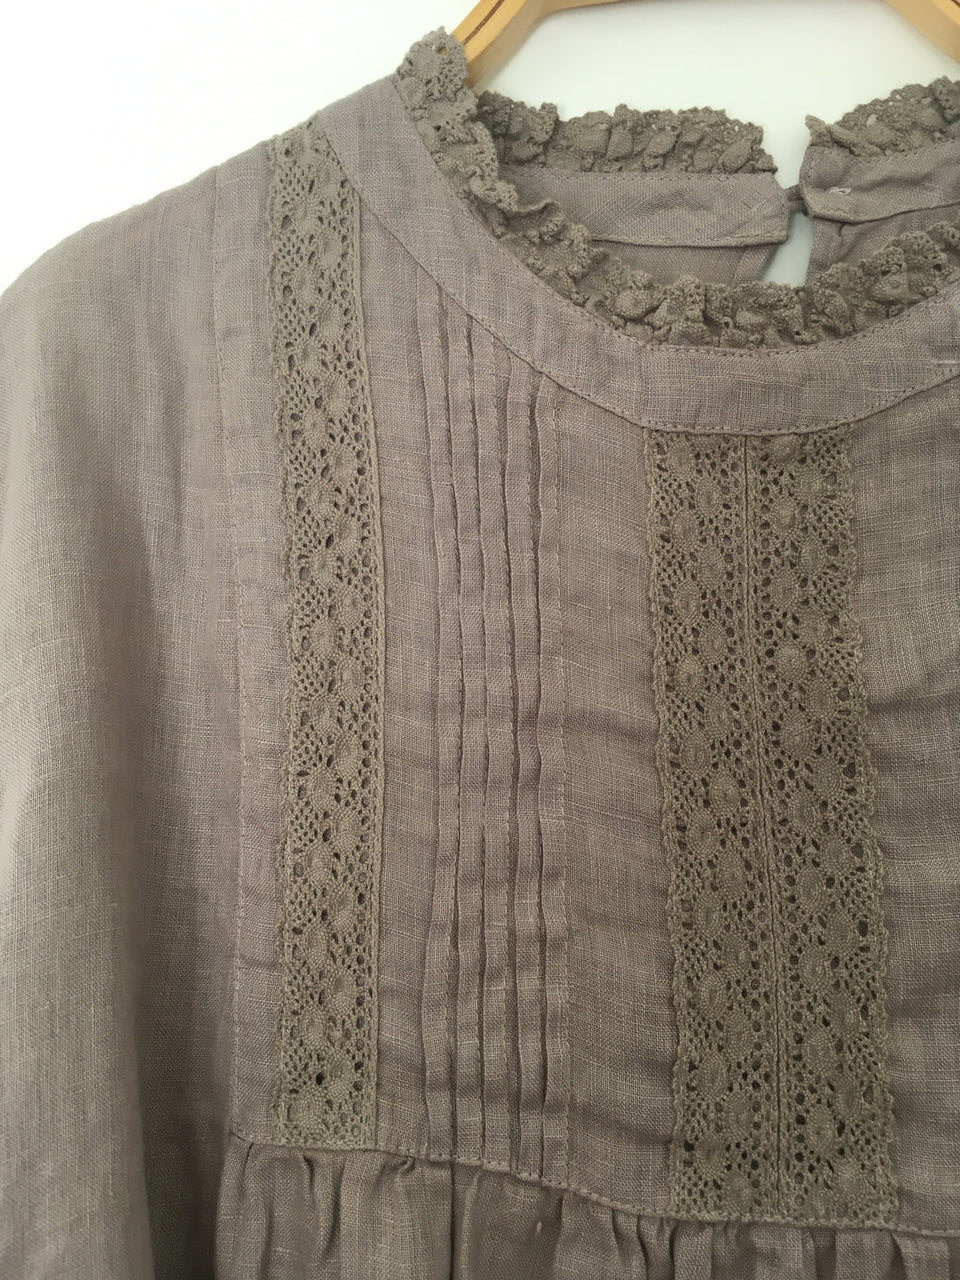 Pure linen chest pleated lace dropped shoulder elegant blouse